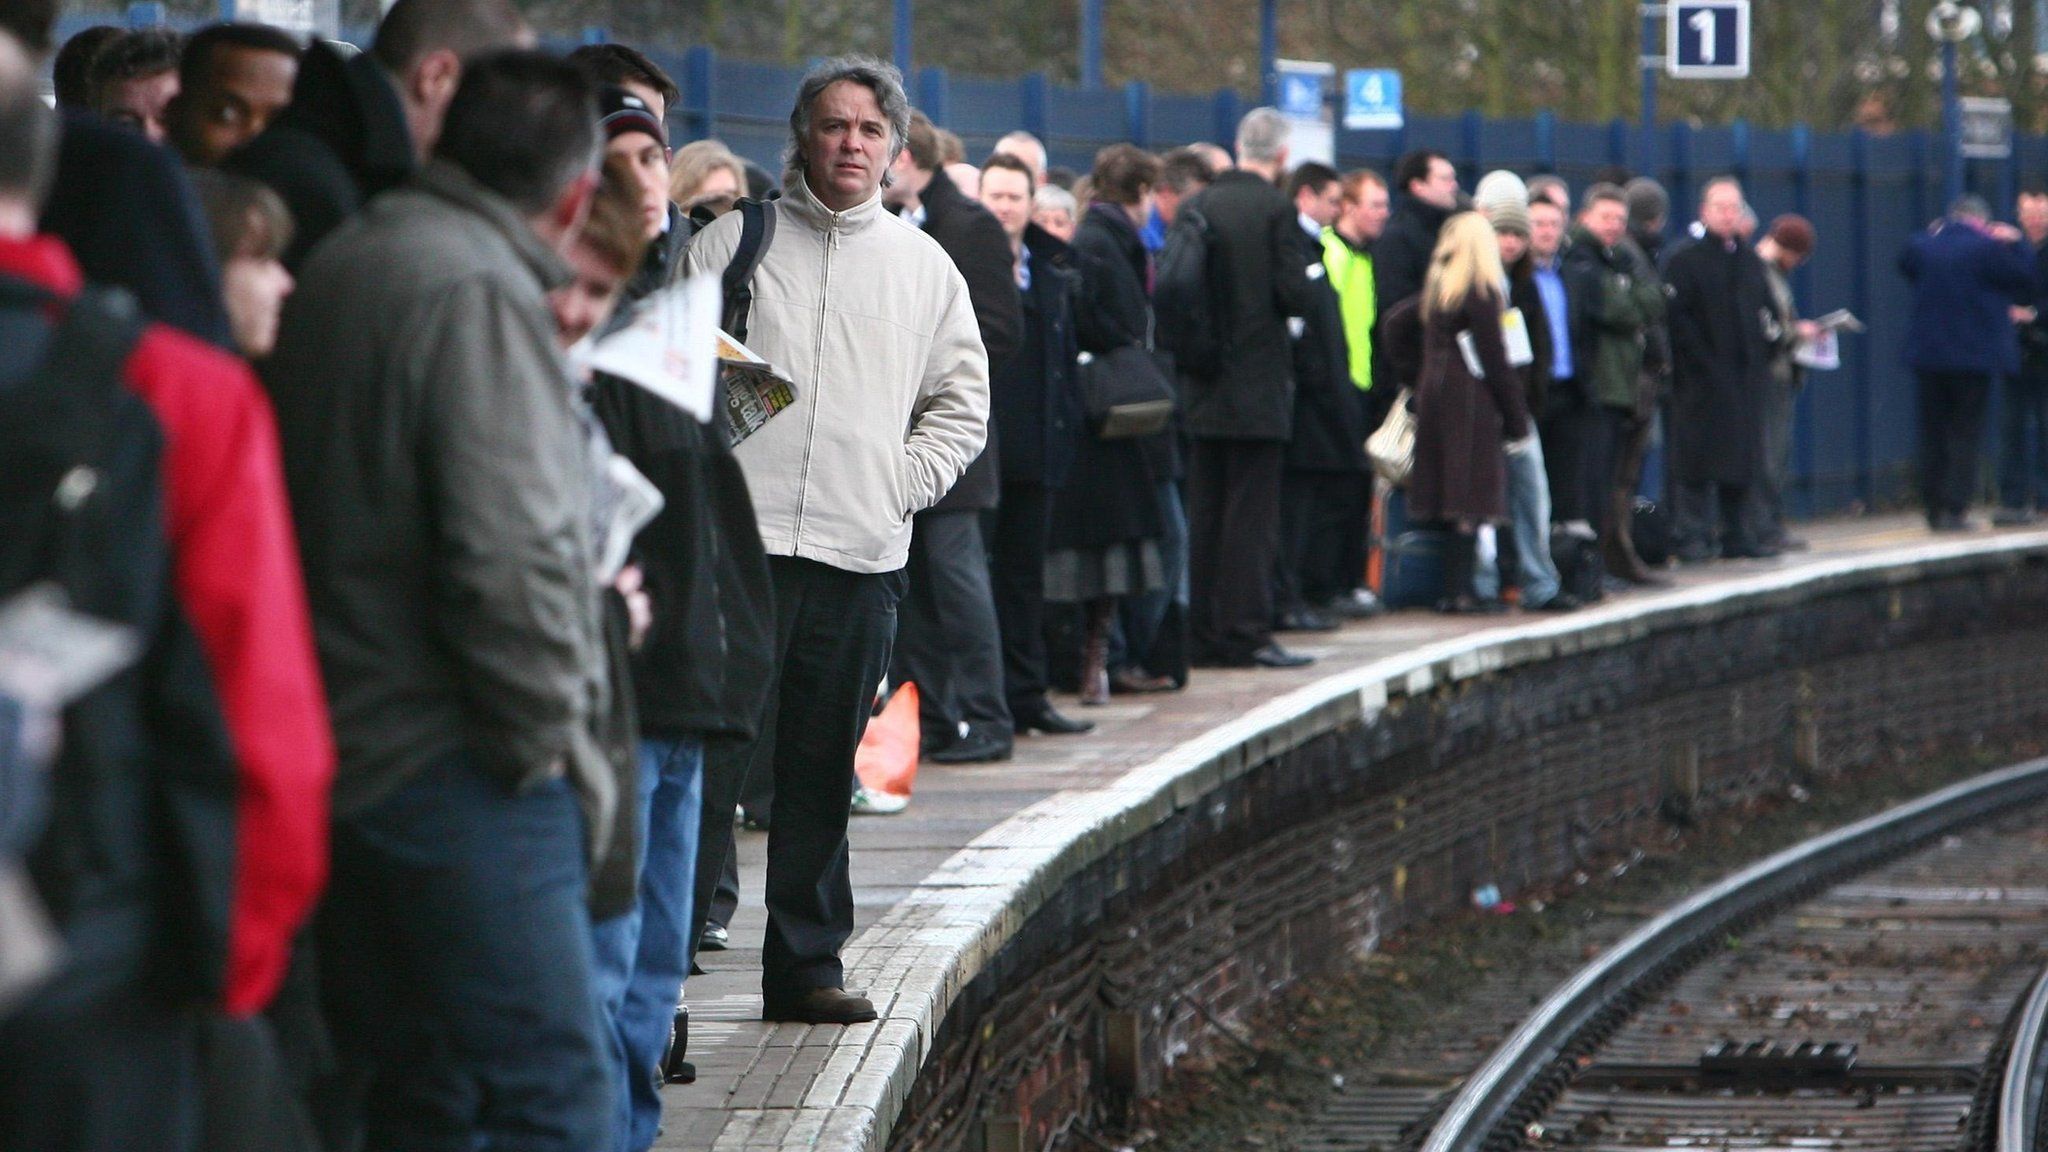 Commuters wait on a railway platform